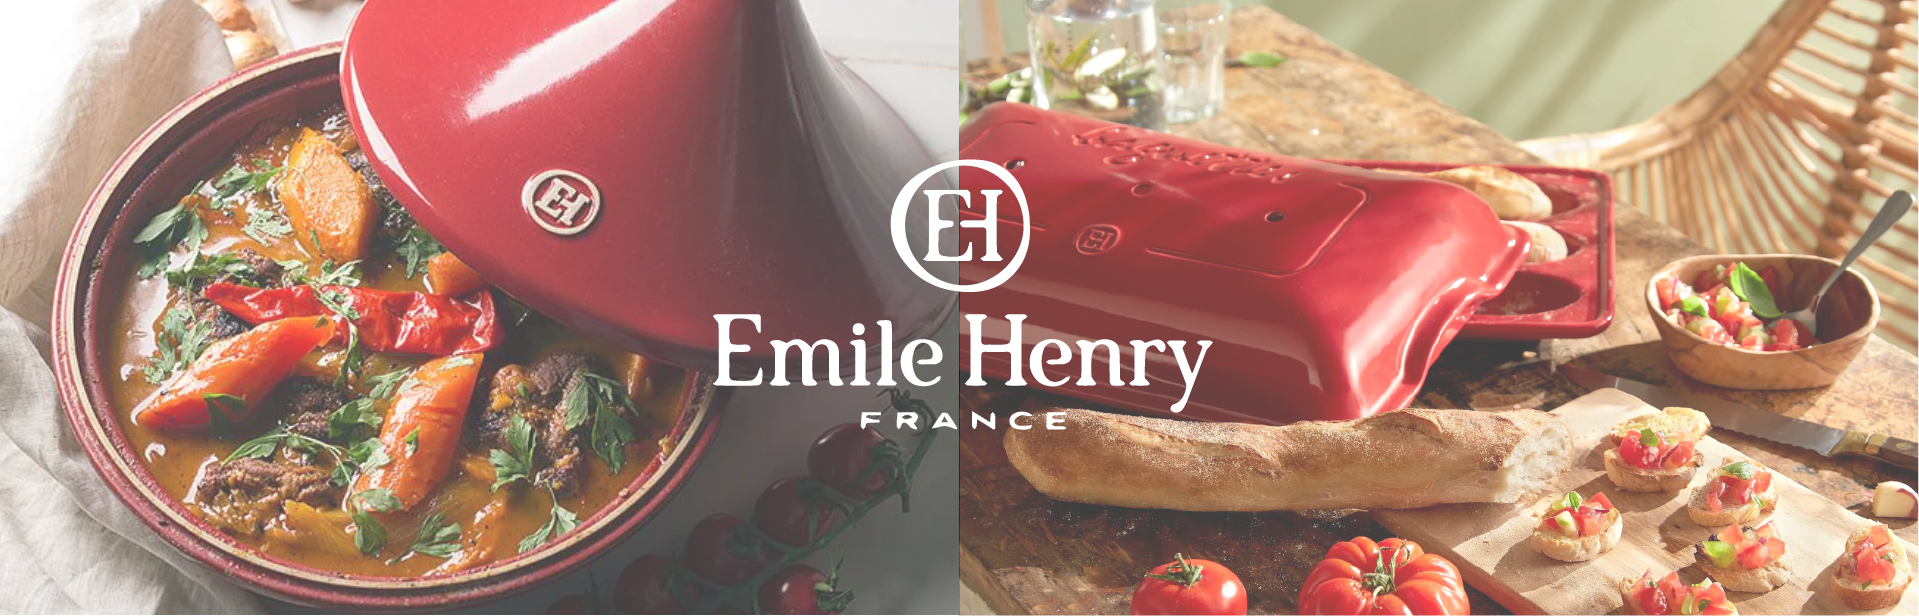 Emile Henry - Round Dutch Oven, 4.2 qt Burgundy